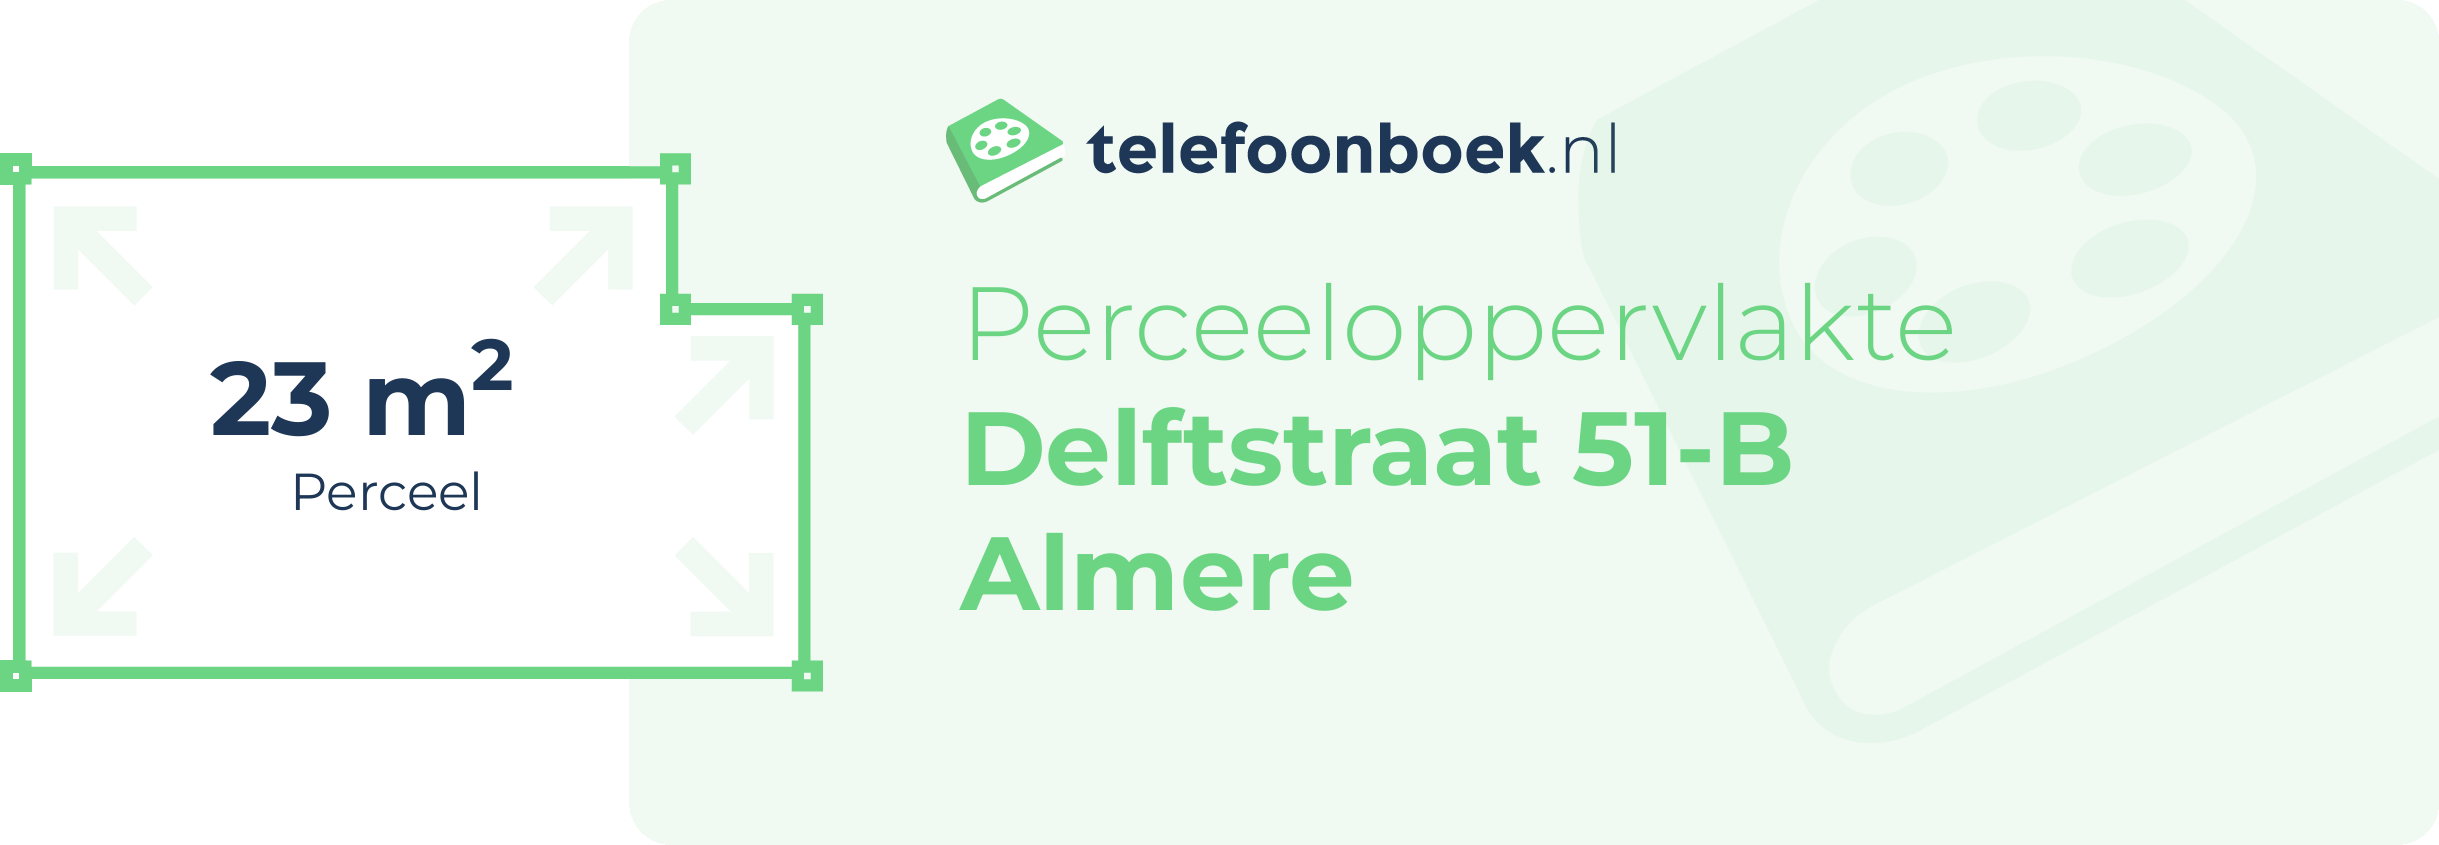 Perceeloppervlakte Delftstraat 51-B Almere